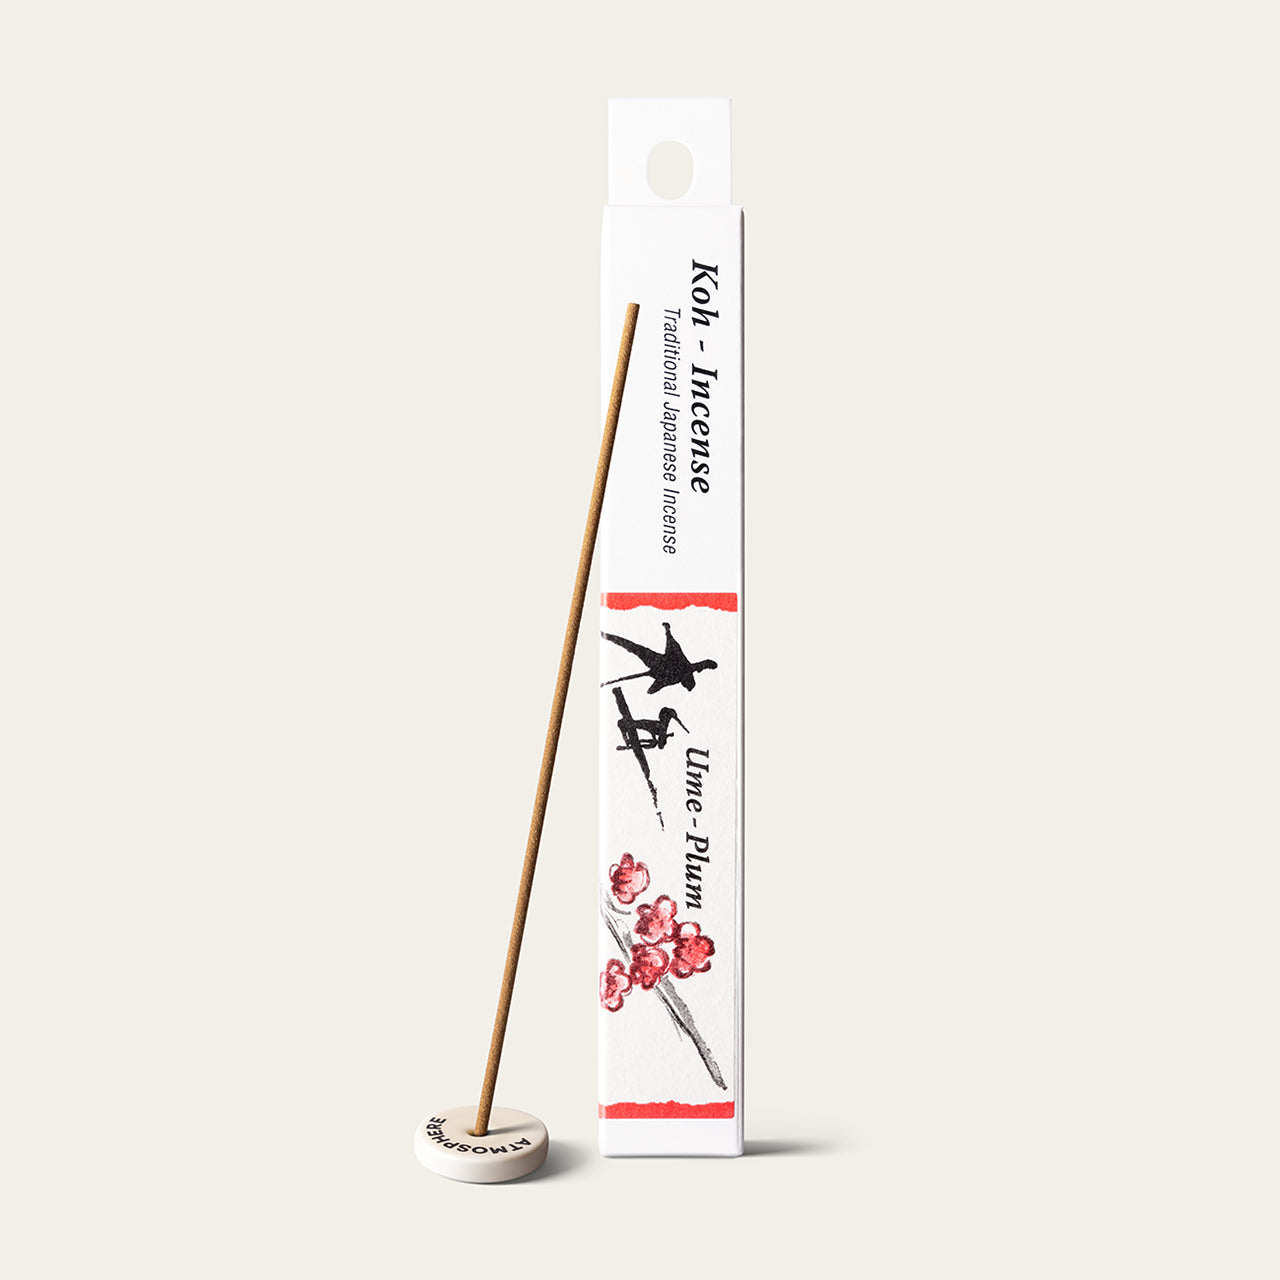 Shoyeido Koh Incense Daily Ume Plum Japanese incense sticks (35 sticks) with Atmosphere ceramic incense holder